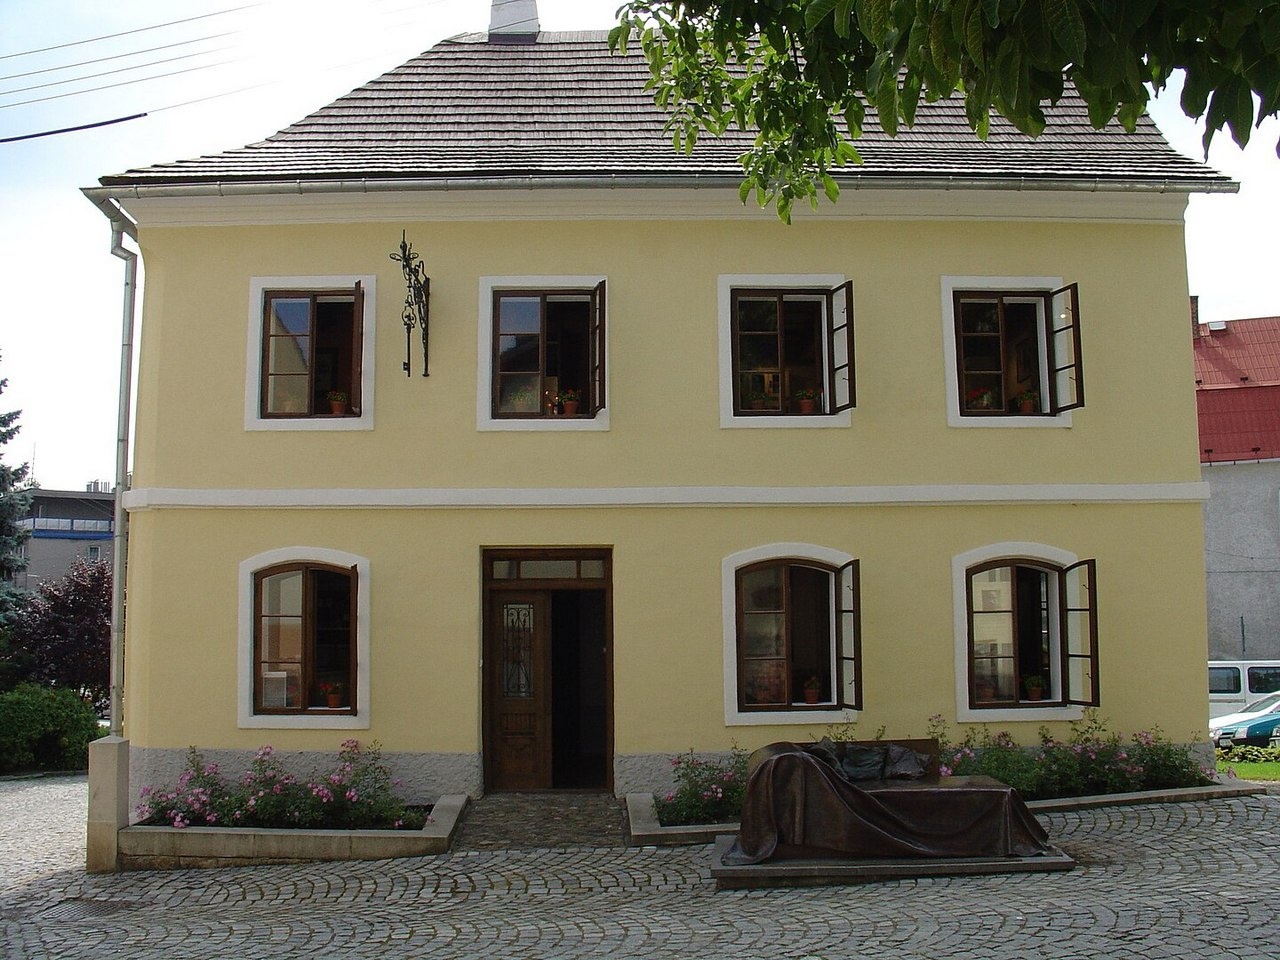 Дом в Пршиборе, в котором родился Шломо Сигизмунд Фройд (Моравия, Чехия).